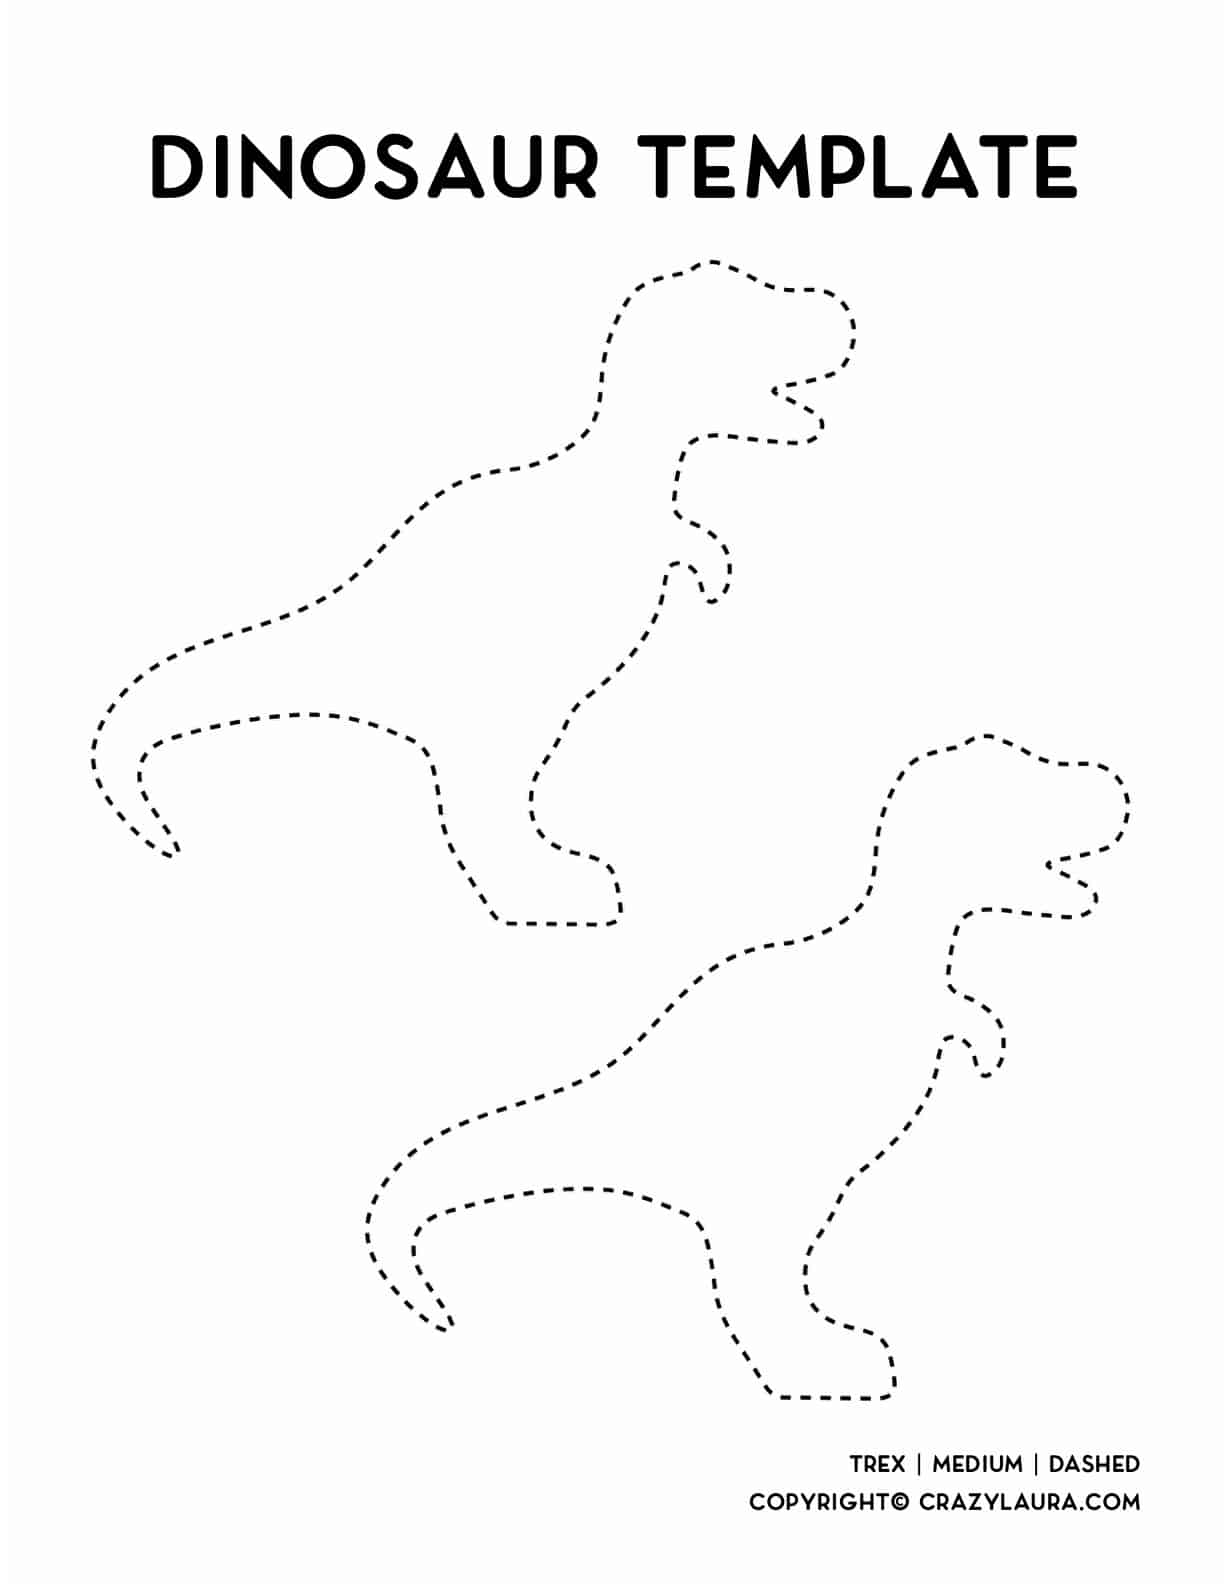 trex dinosaur free template download